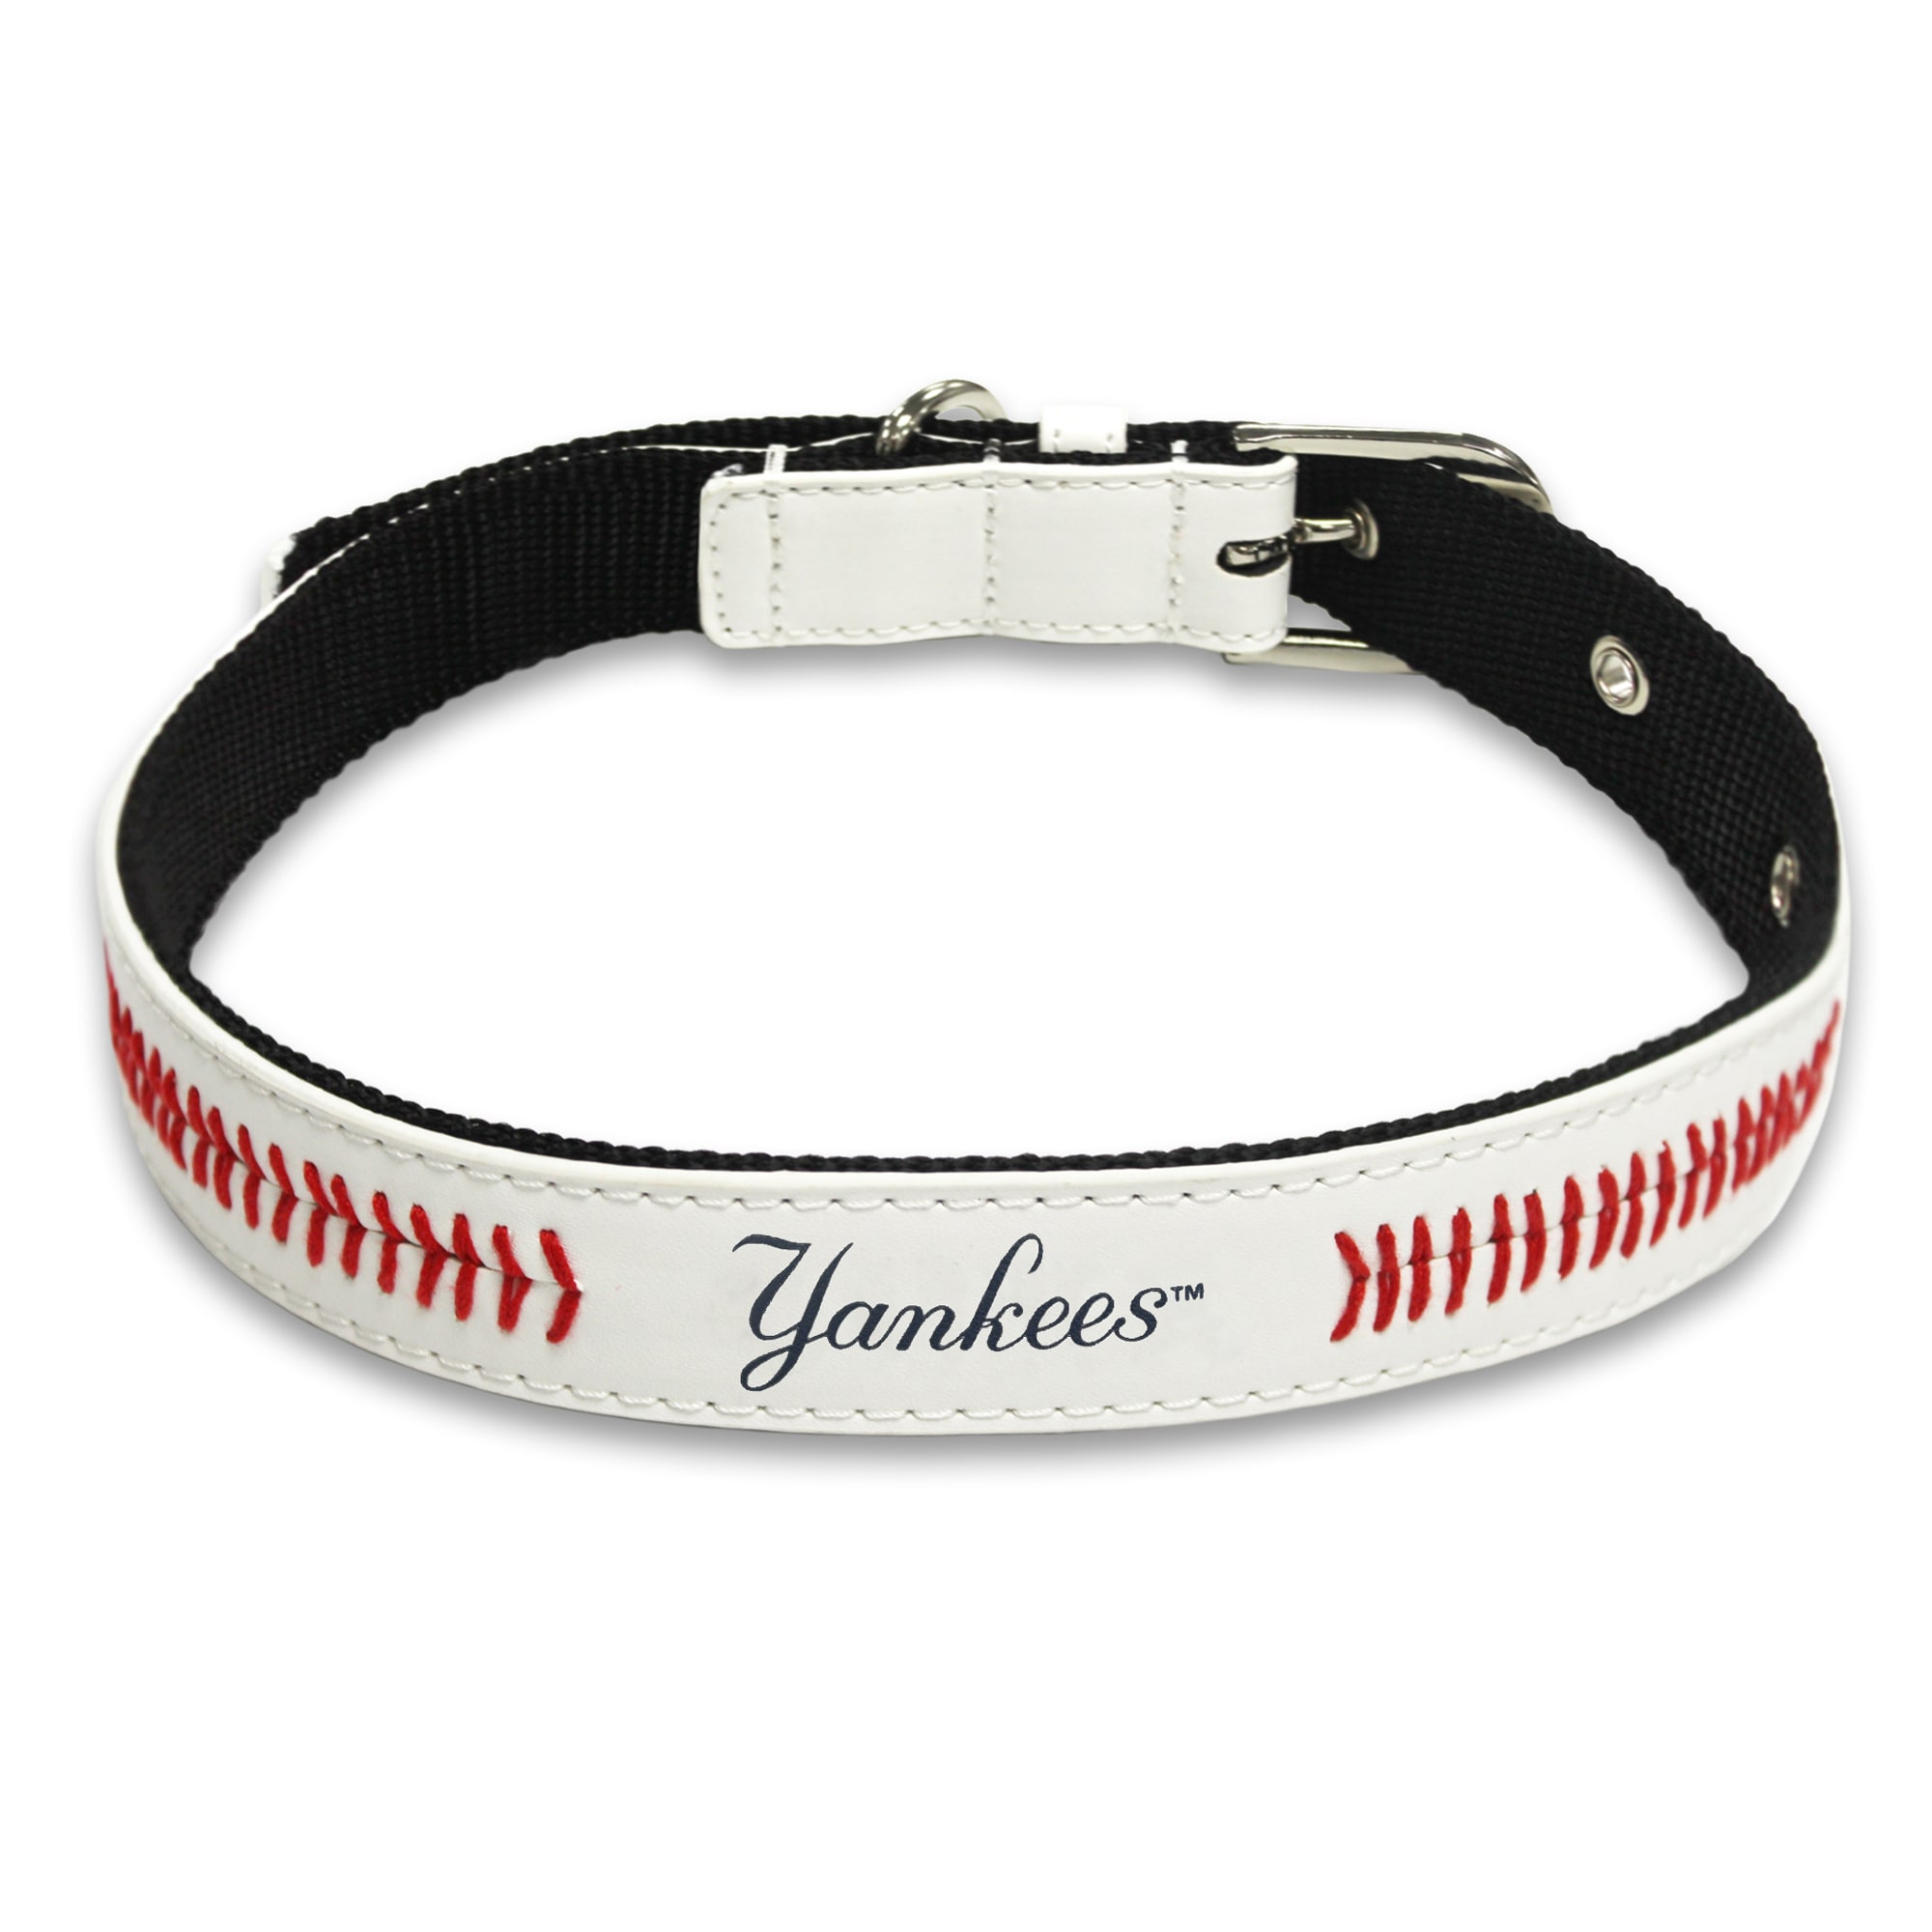 New York Yankees Double Print Dog Leash » Moiderer's Row : Bronx Baseball